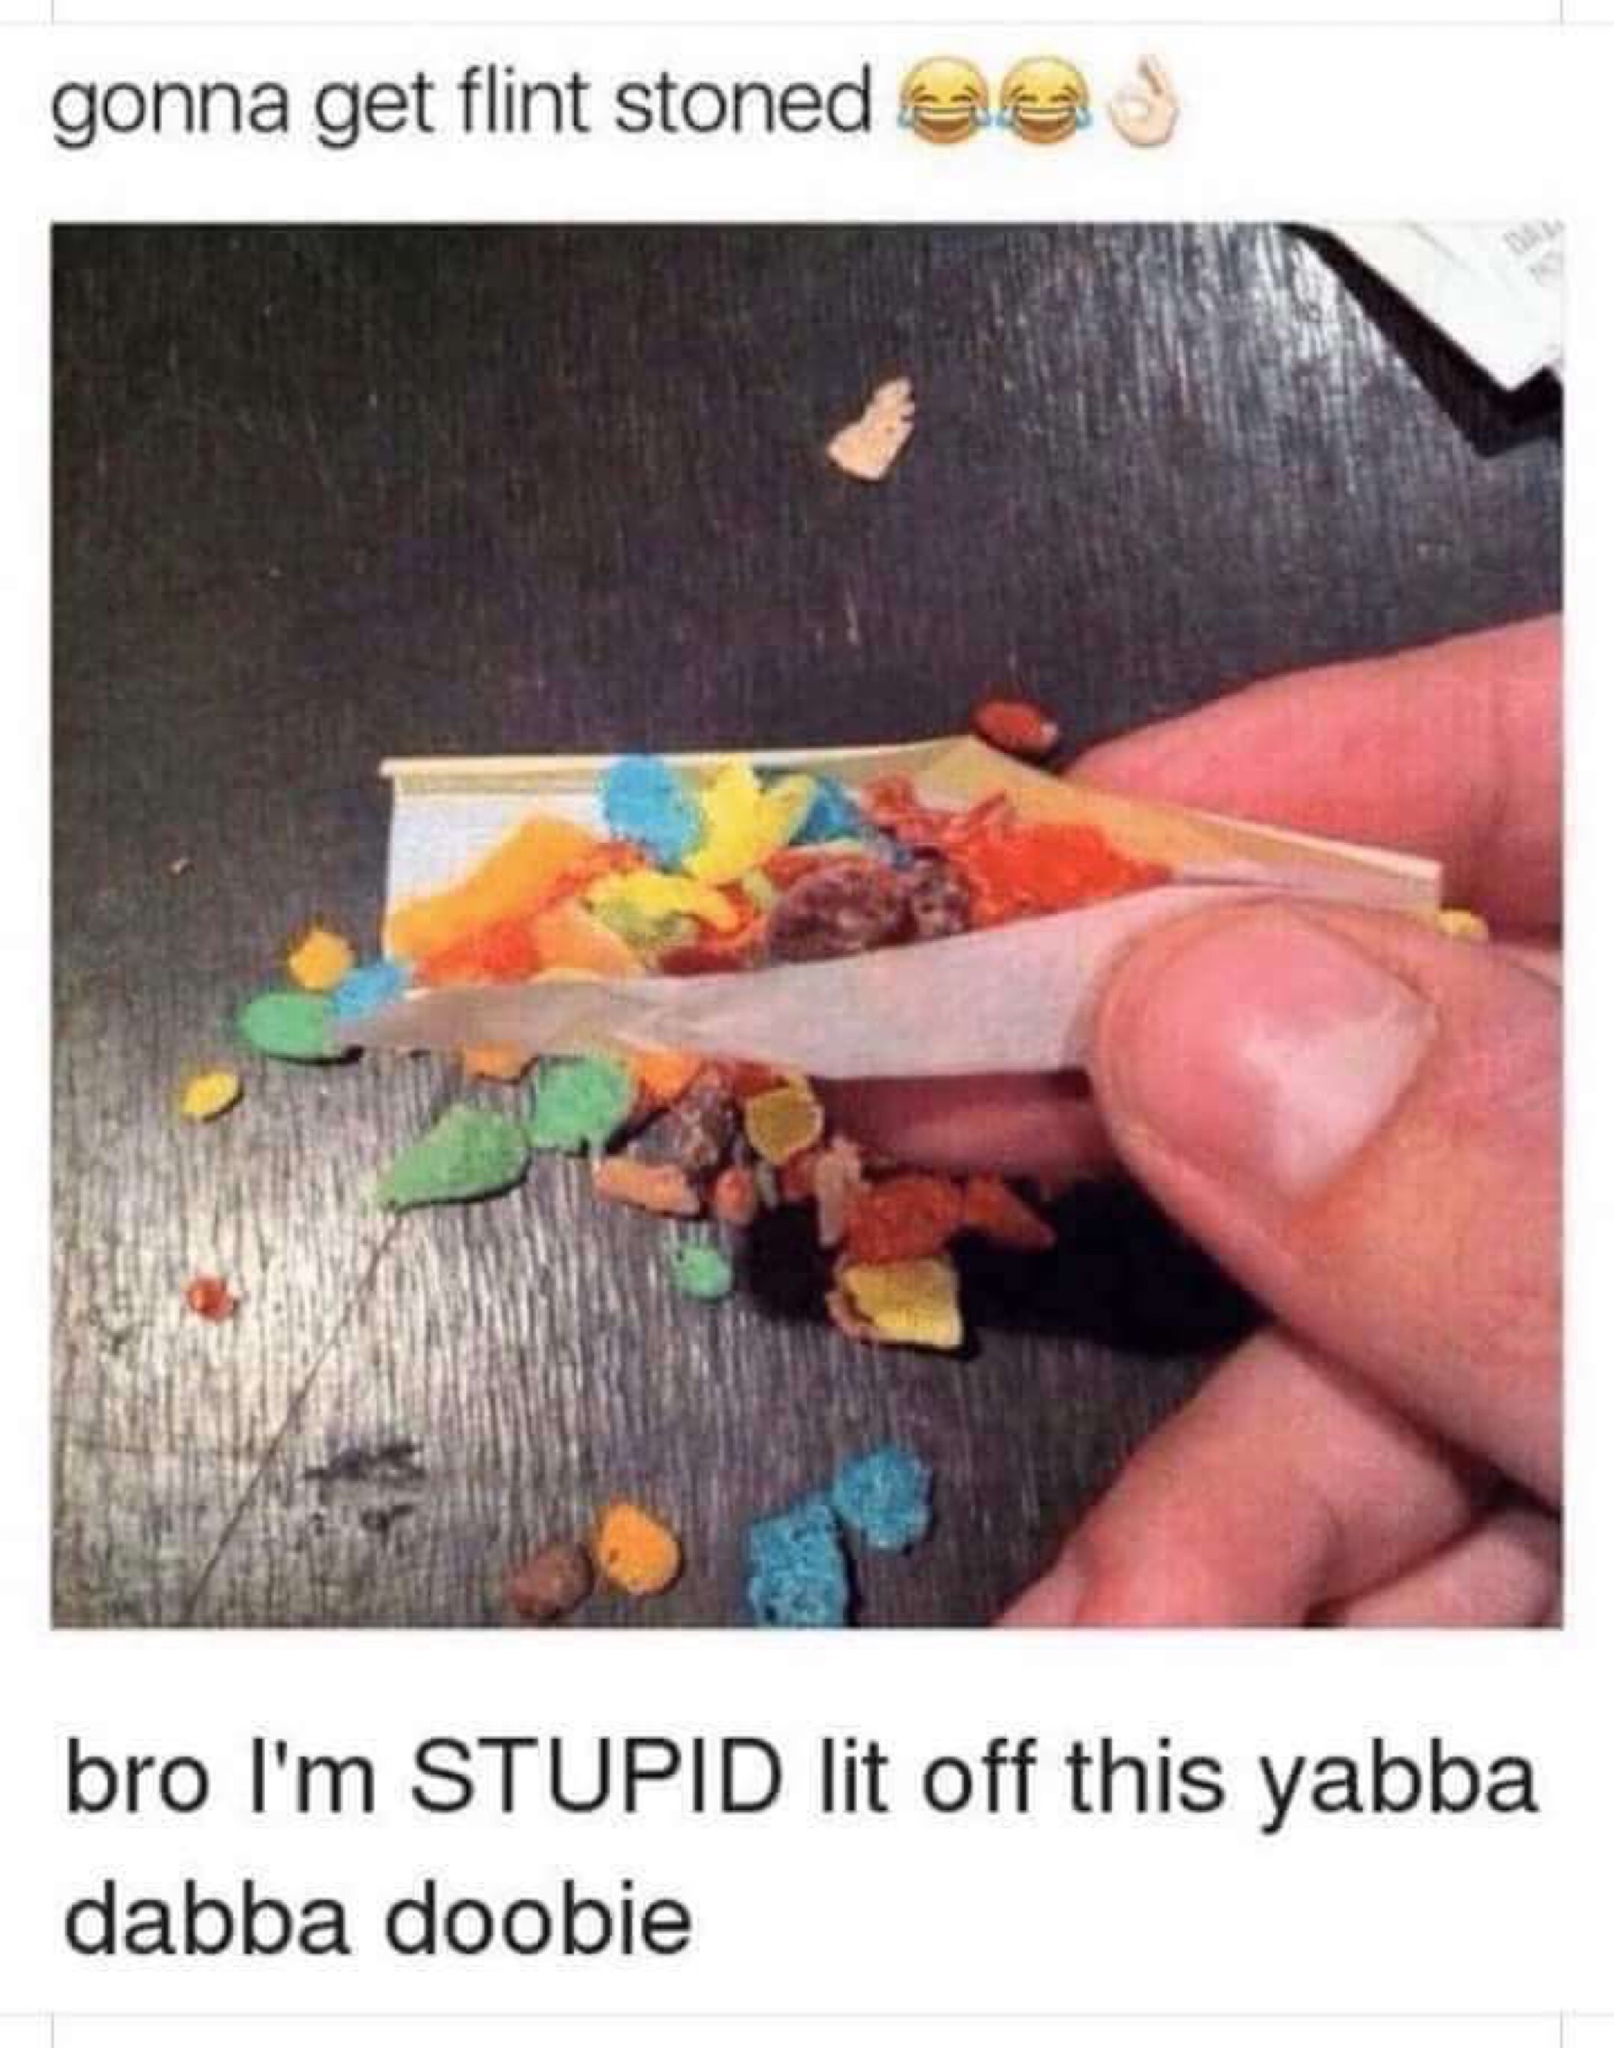 yabba dabba doobie meme - gonna get flint stoned ees bro I'm Stupid lit off this yabba dabba doobie